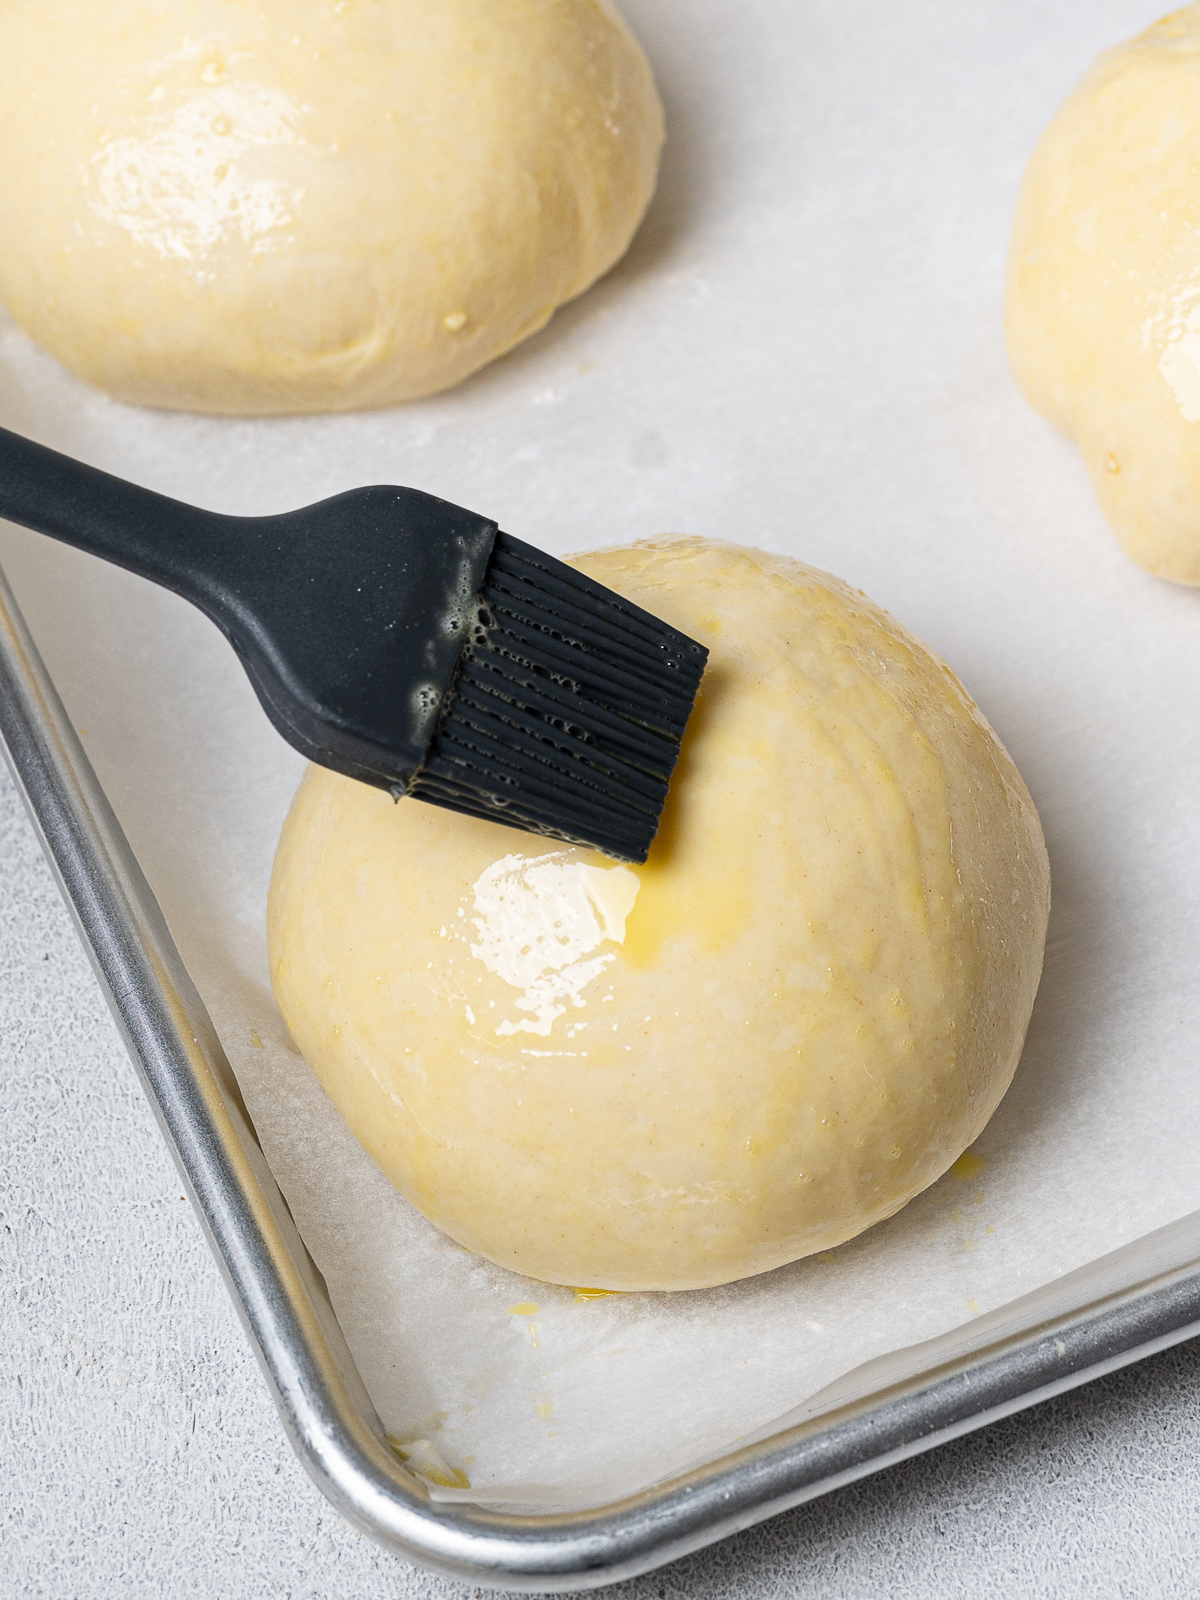 brushing dough ball with egg wash